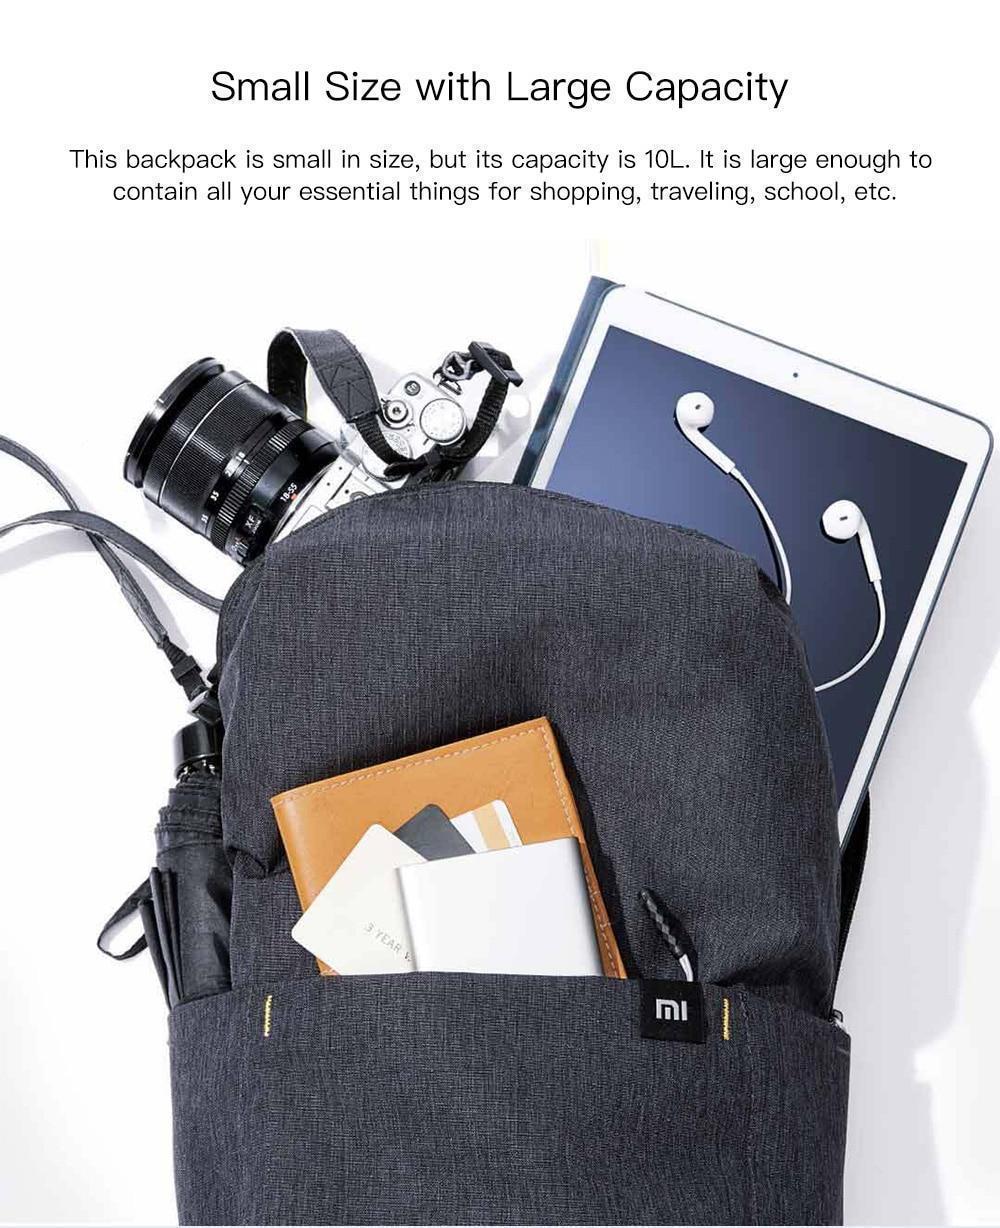 Original Xiaomi Mi Colorful Mini Backpack Bag - Black